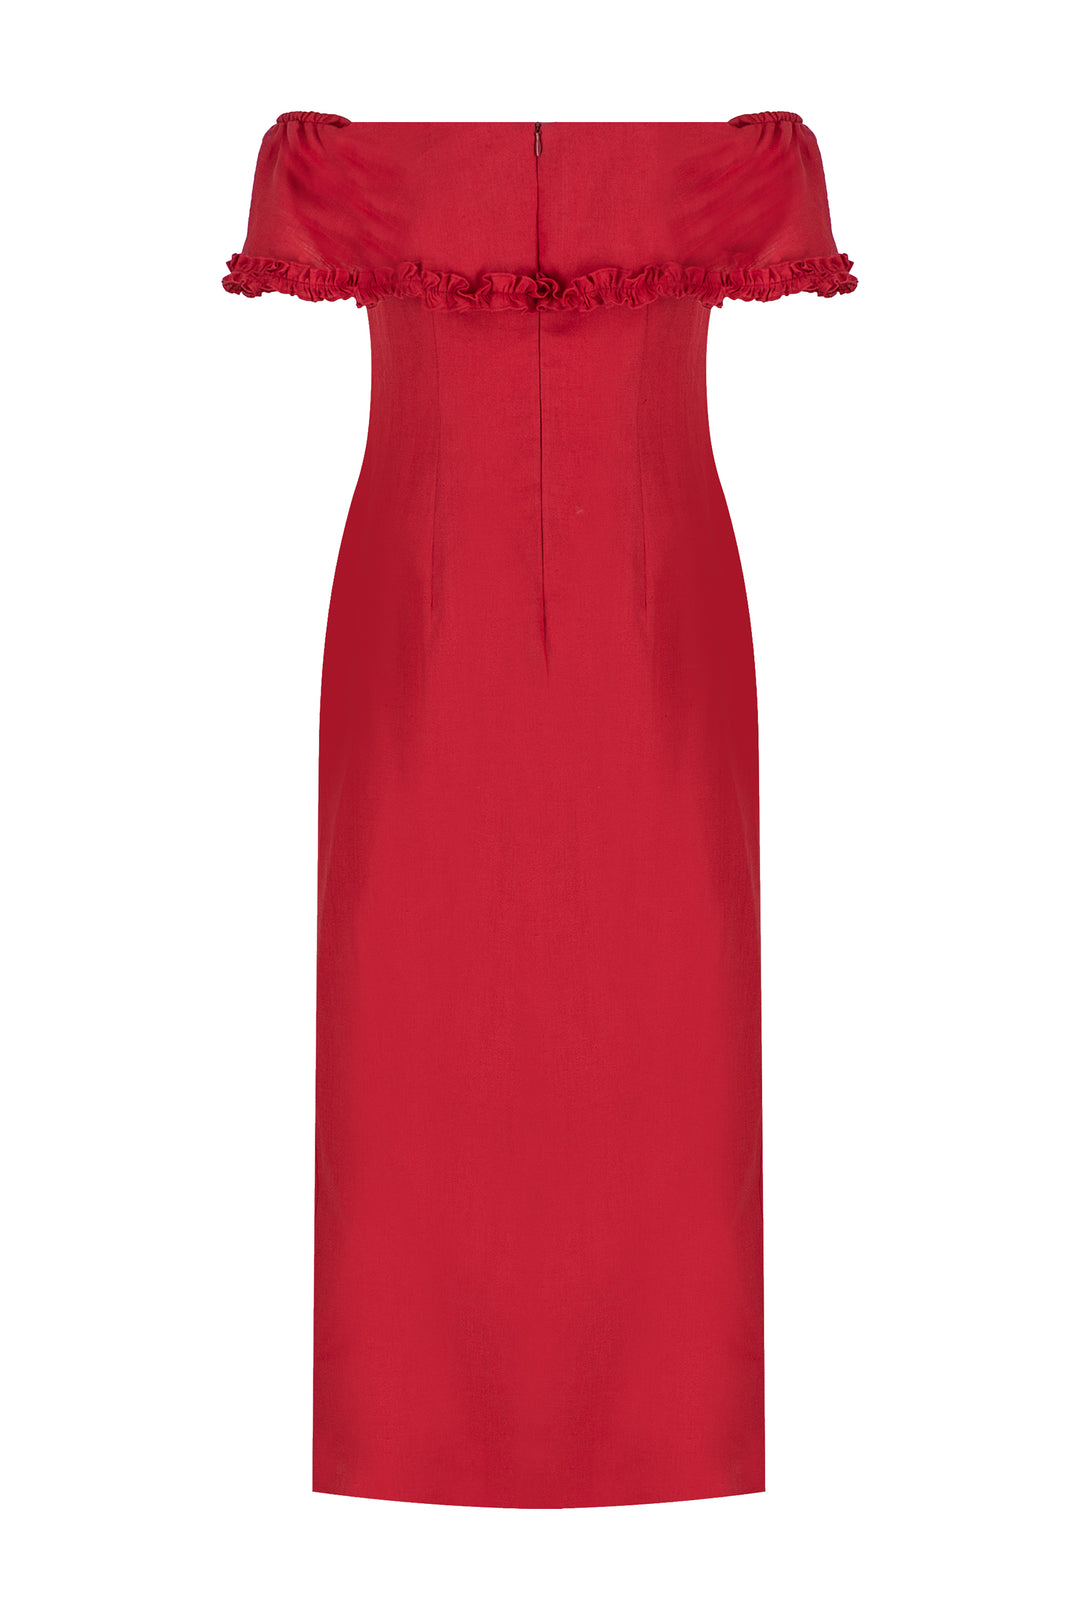 Kırmızı Straplez, Kısa-Kol, Keten Midi Elbise